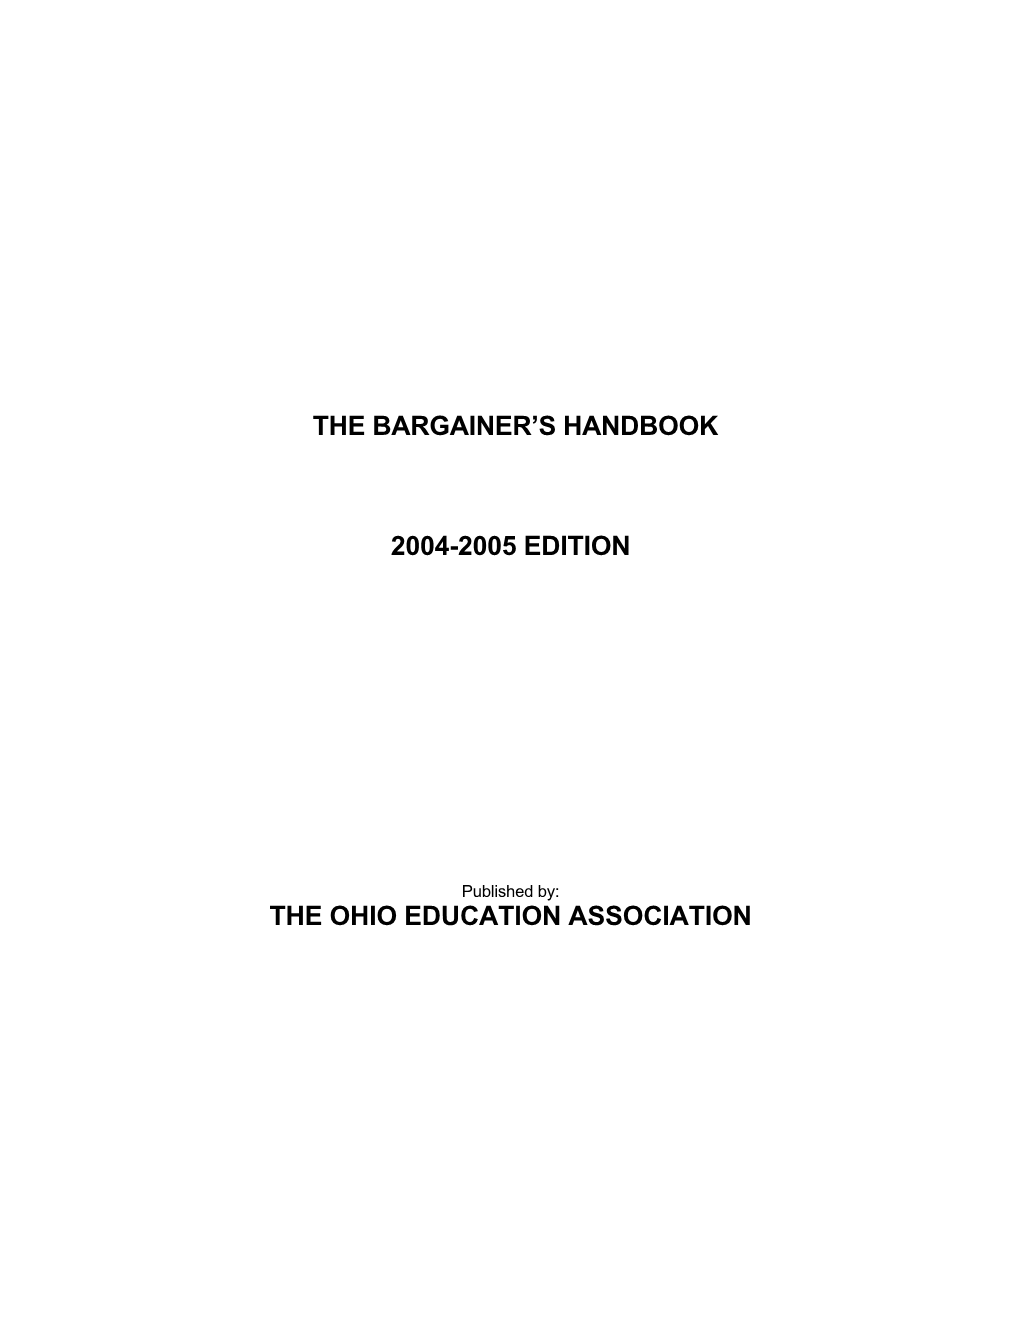 The Bargainer's Handbook